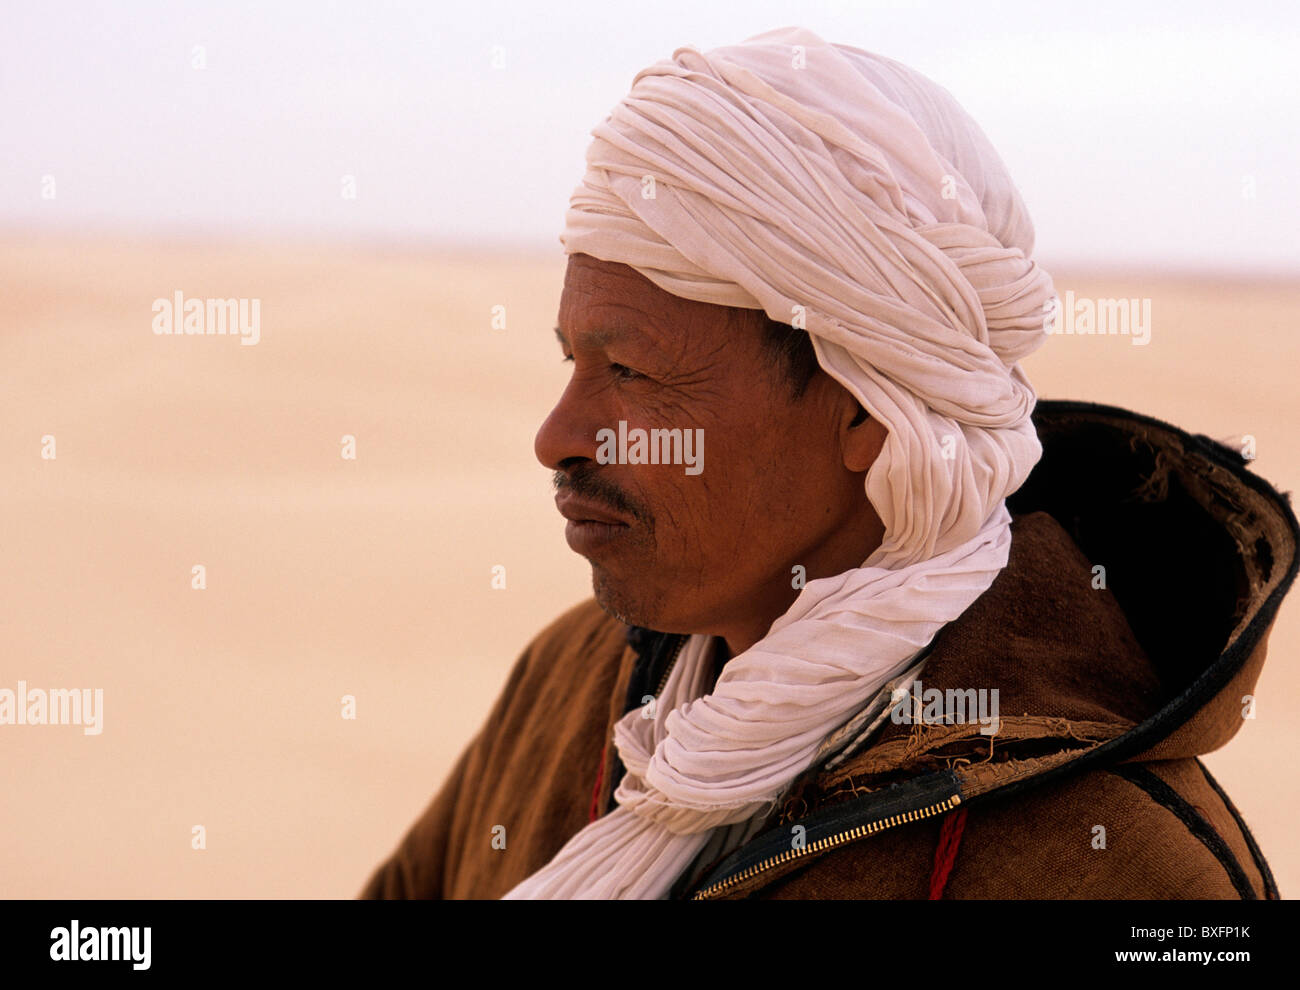 Tunisian man in traditional Berber dress on the edge of the Sahara desert near the oasis town of Tozeur- Tunisia Stock Photo